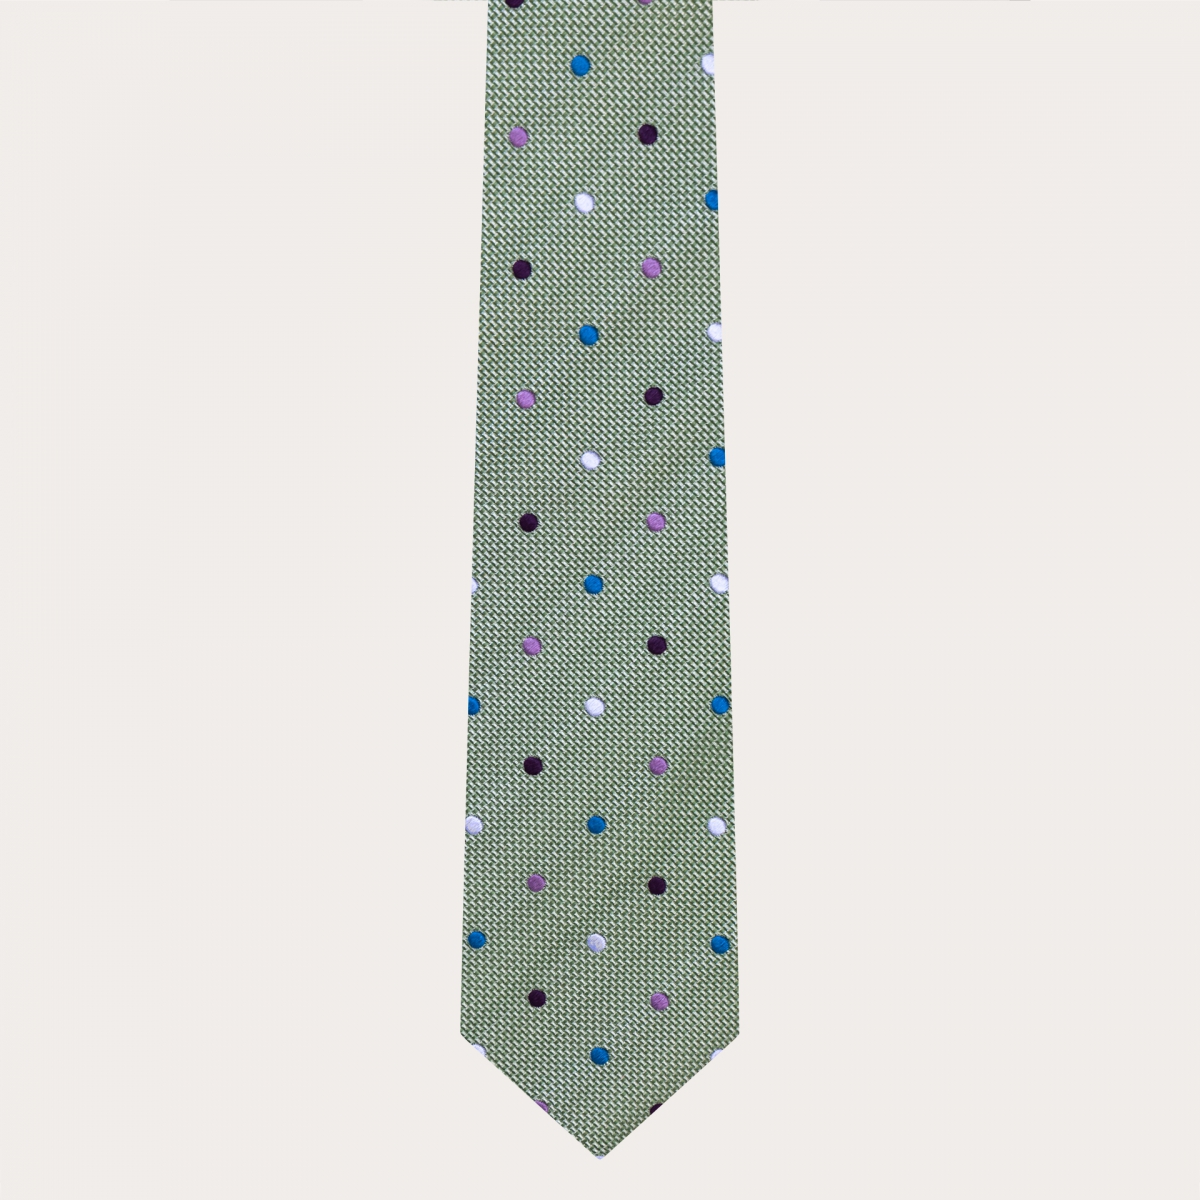 Raffinata cravatta in seta jacquard, verde con pois multicolor